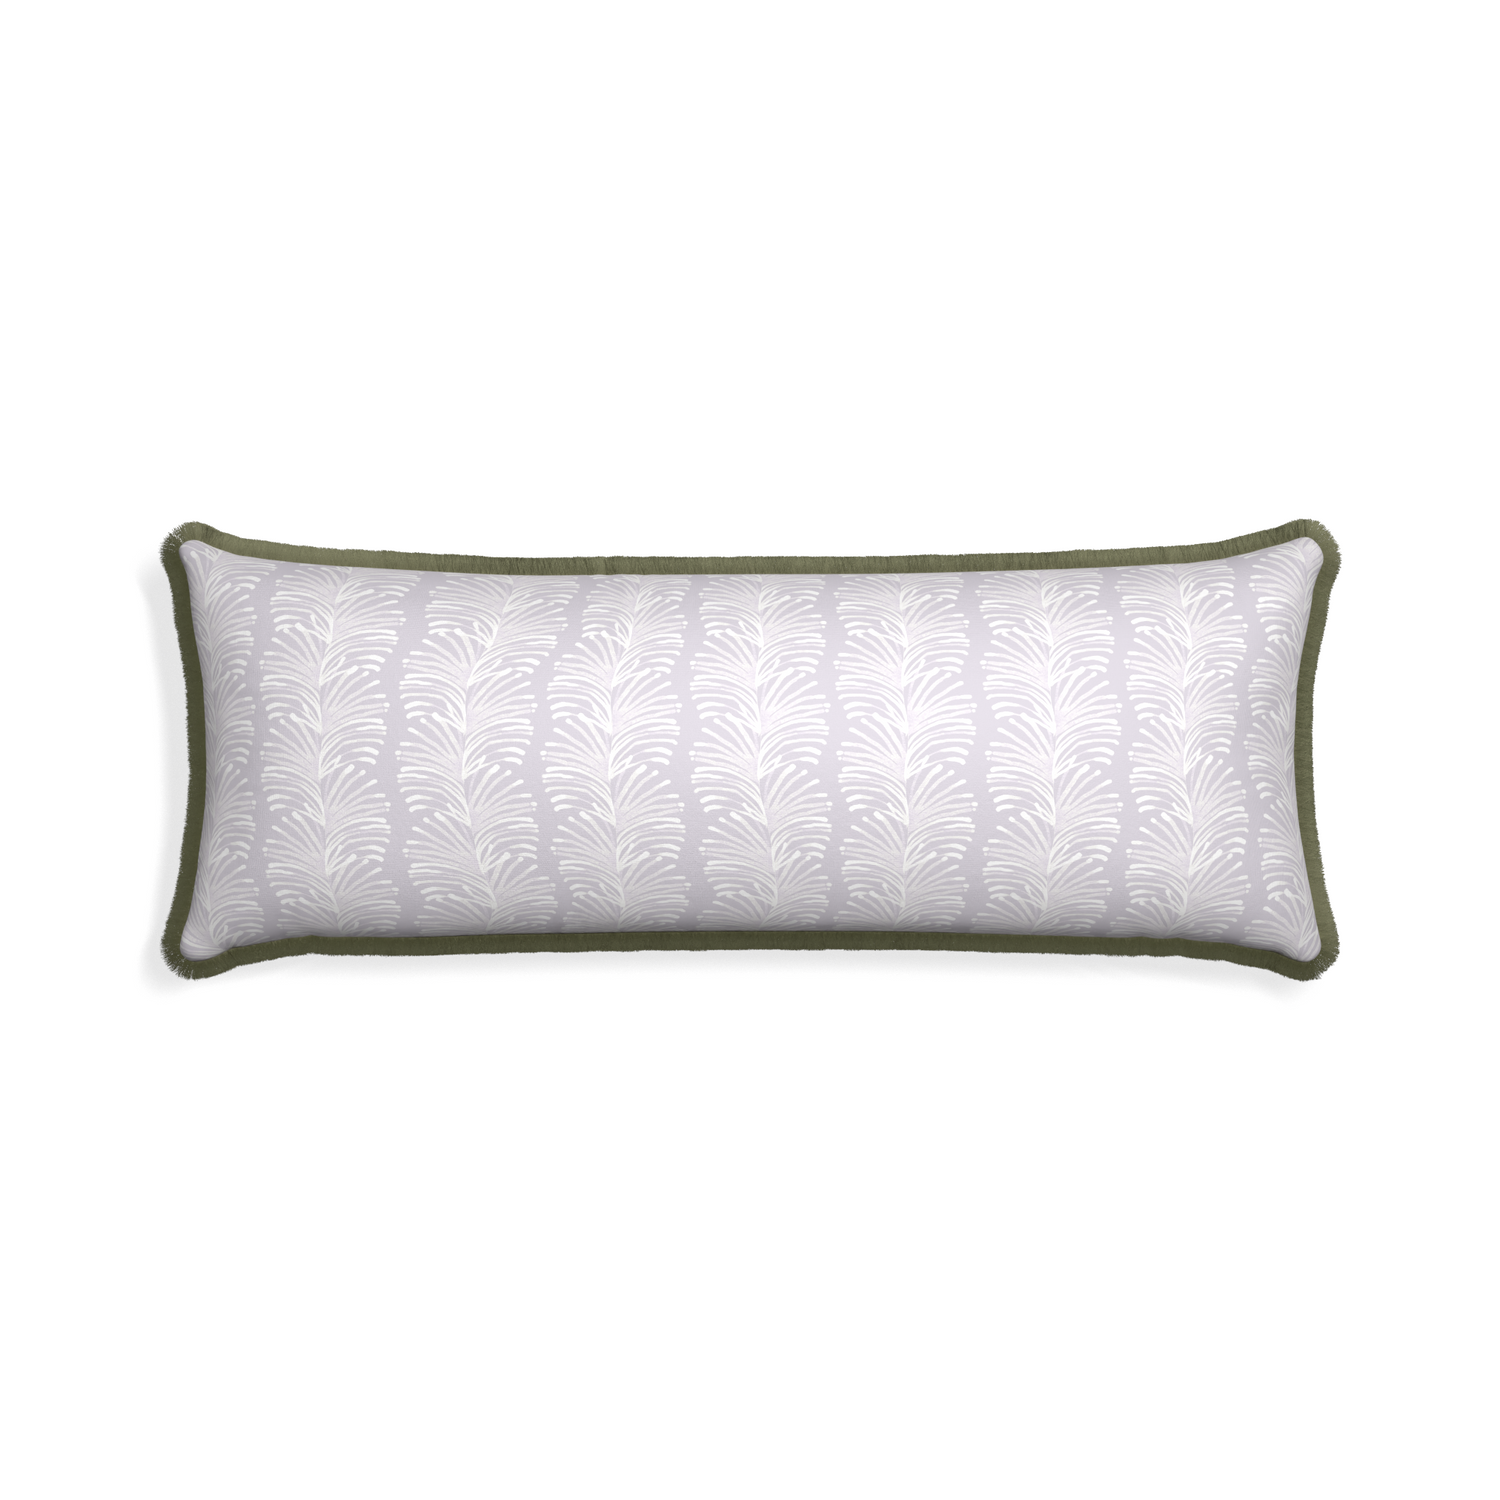 Xl-lumbar emma lavender custom pillow with sage fringe on white background